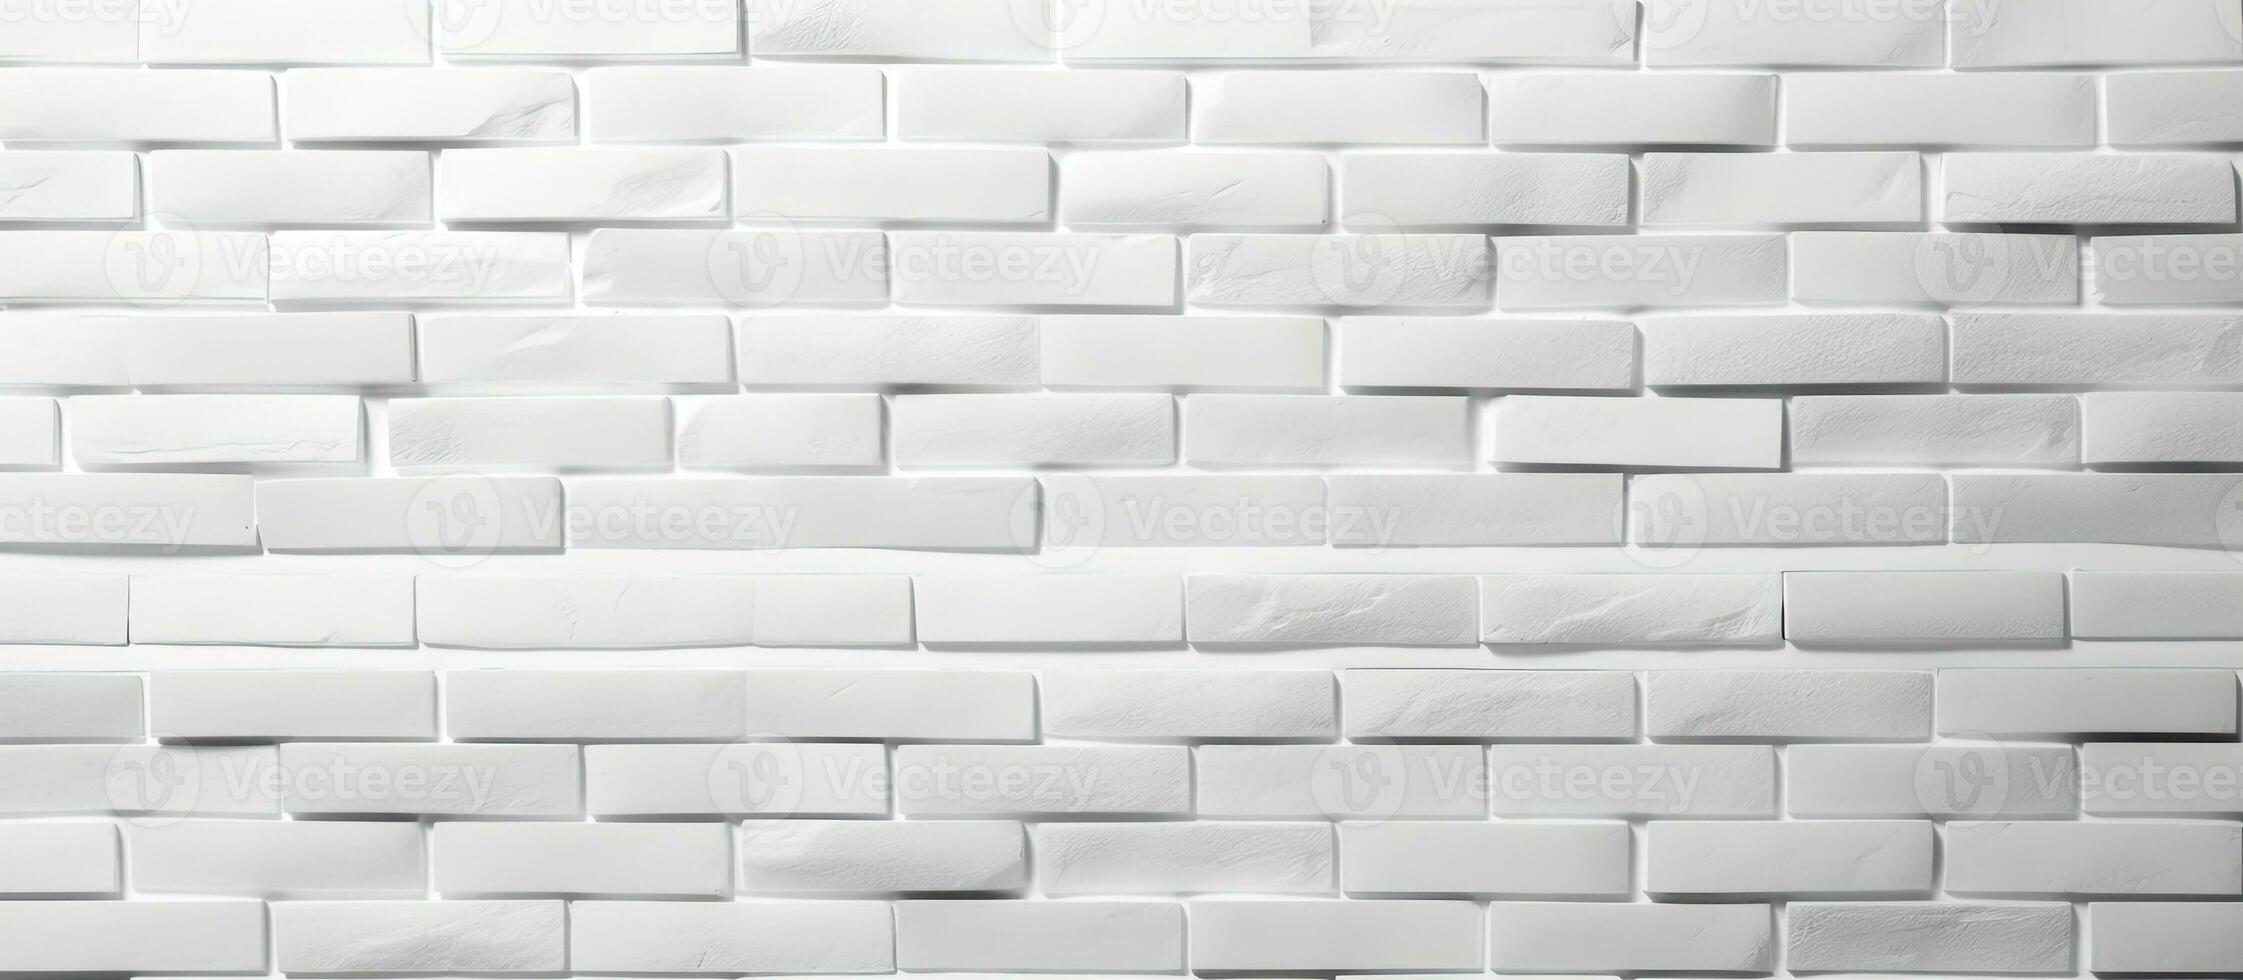 Freebie: White Brick Wall Textures - WebFX